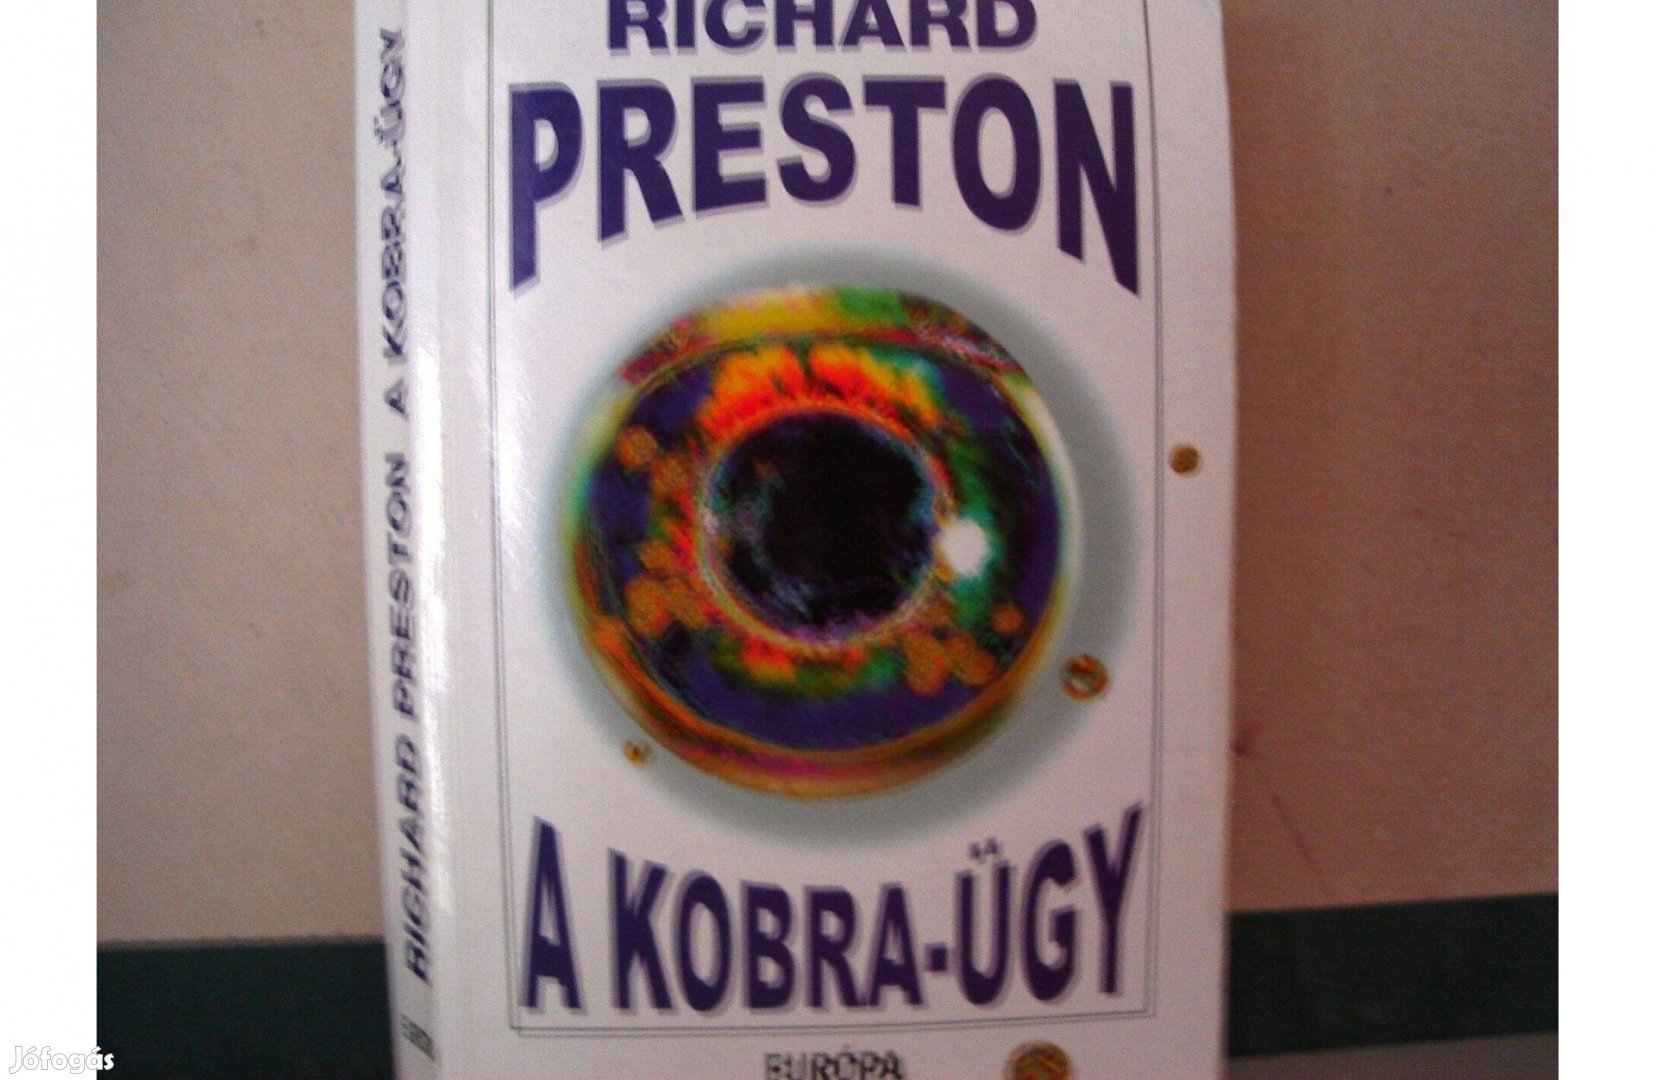 Richard Preston: A Kobra - ügy